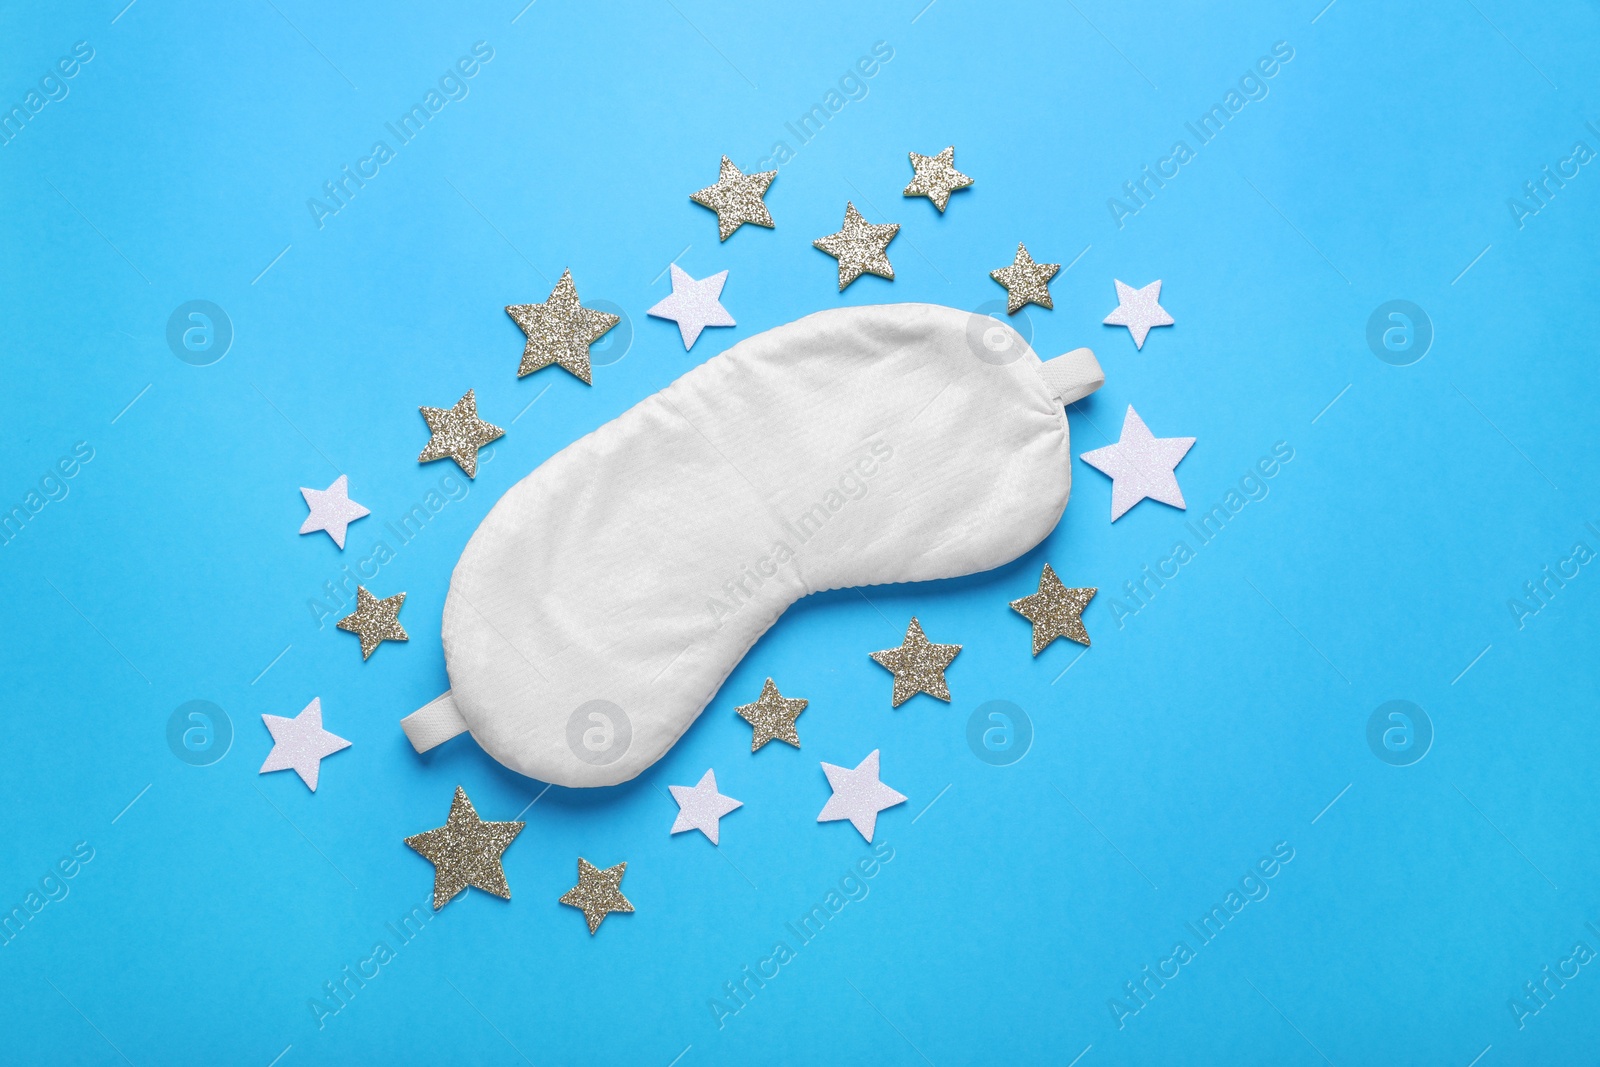 Photo of Soft sleep mask and decorative stars on light blue background, flat lay